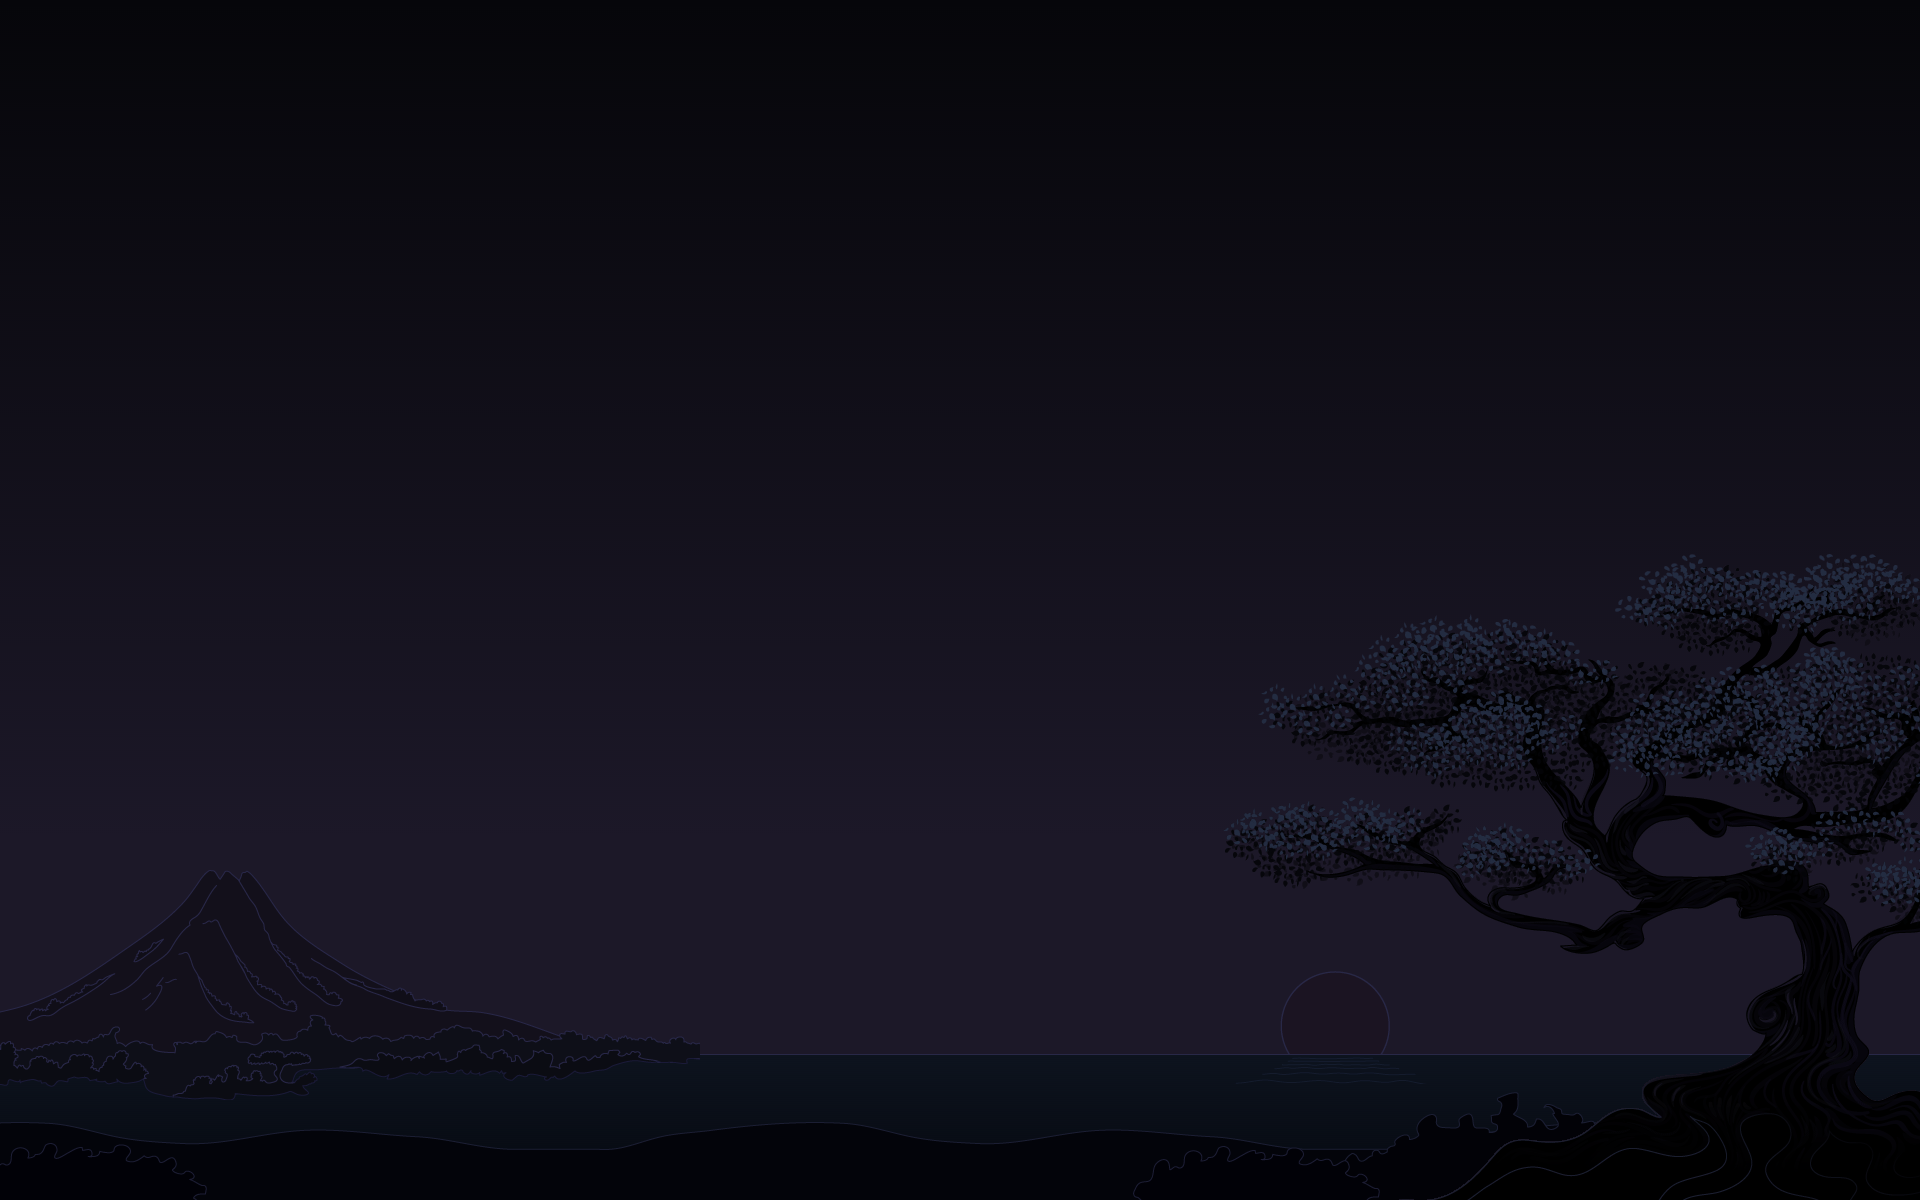 General 1920x1200 dark minimalism cherry trees sunset mountains digital art nature landscape sky